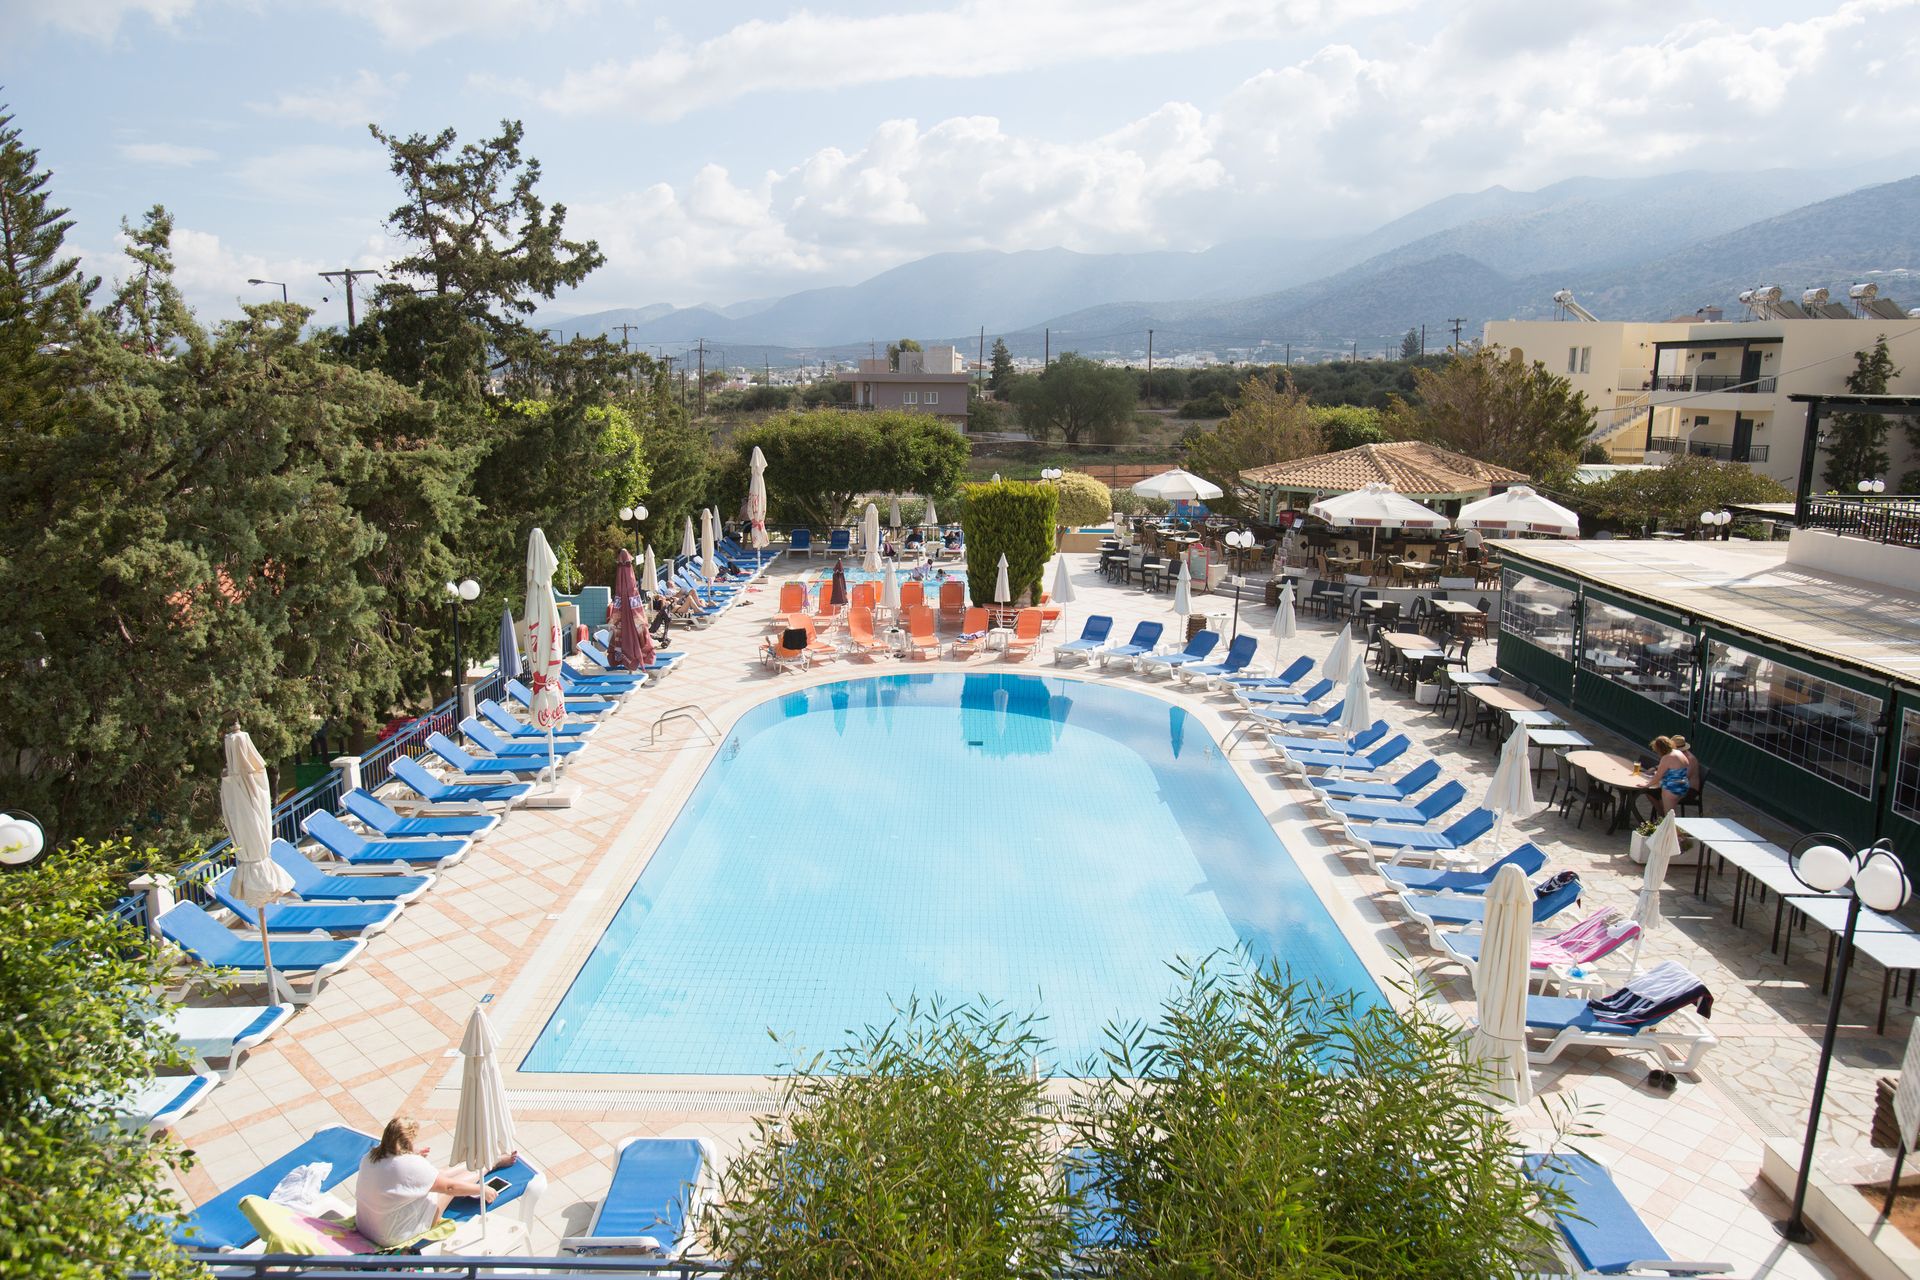 Anastasia Hotel Crete - Σταλίδα, Κρήτη ✦ 2 Ημέρες (1 Διανυκτέρευση) ✦ 2 άτομα ✦ 2 ✦ 29/04/2022 έως 30/09/2022 ✦ Υπέροχη Τοποθεσία!